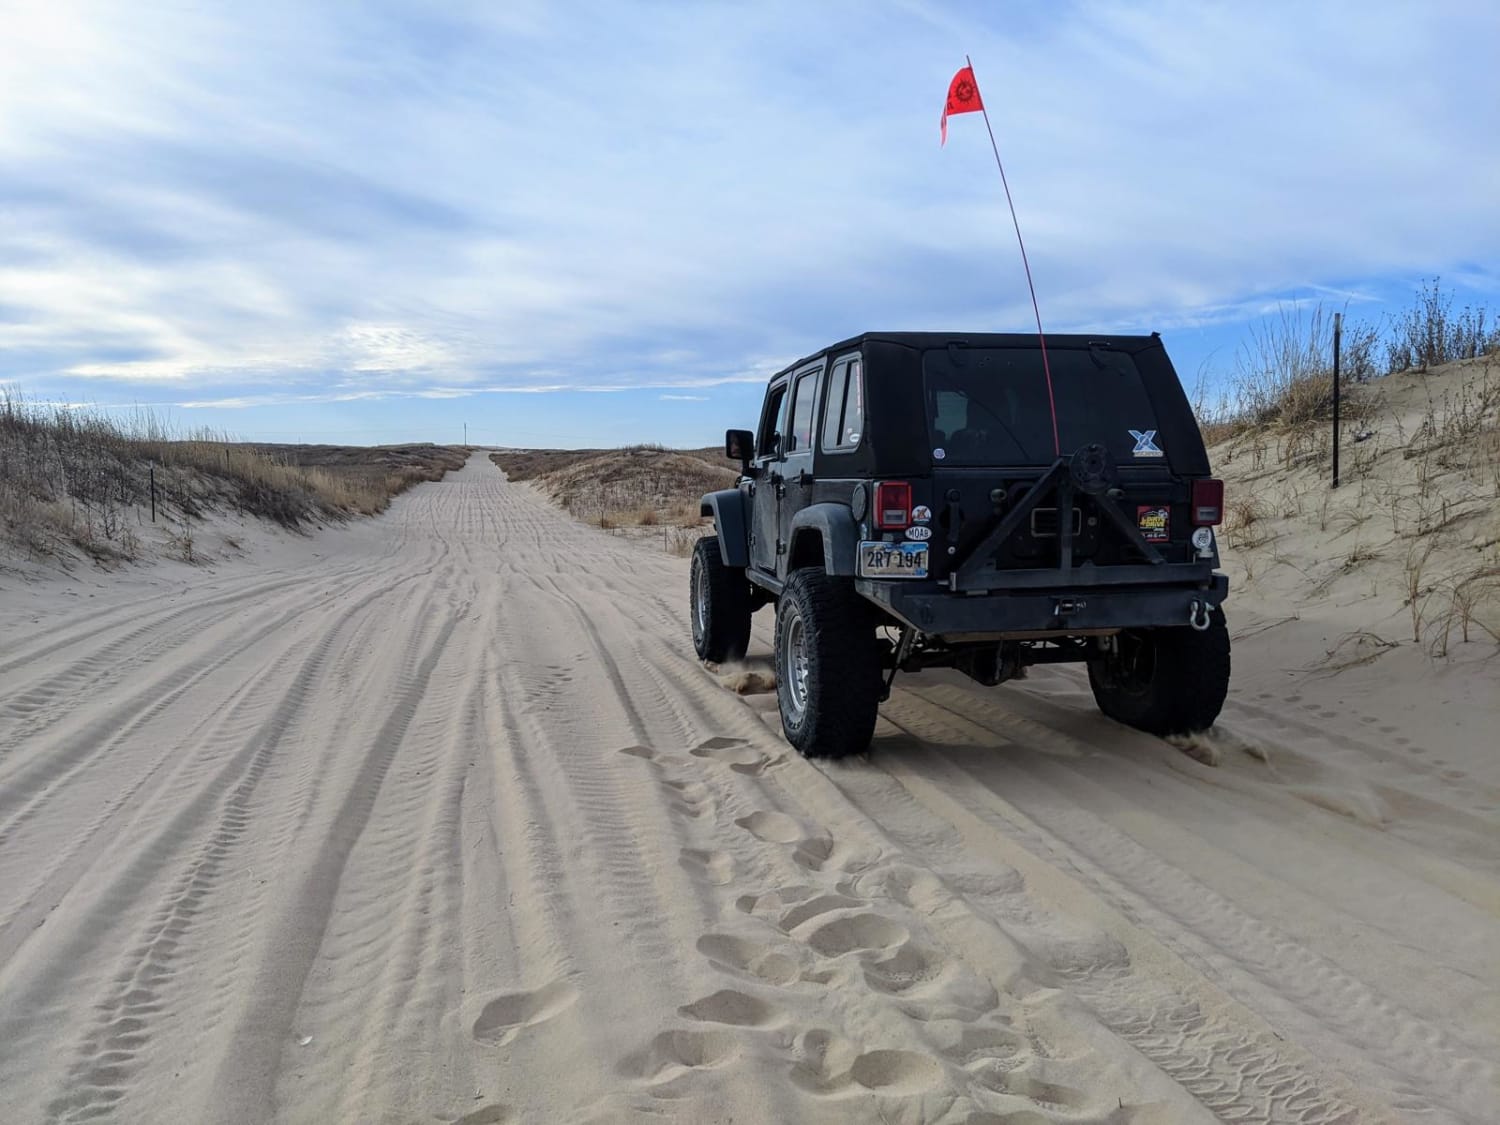 Syracuse Sand Dunes Perimeter Run